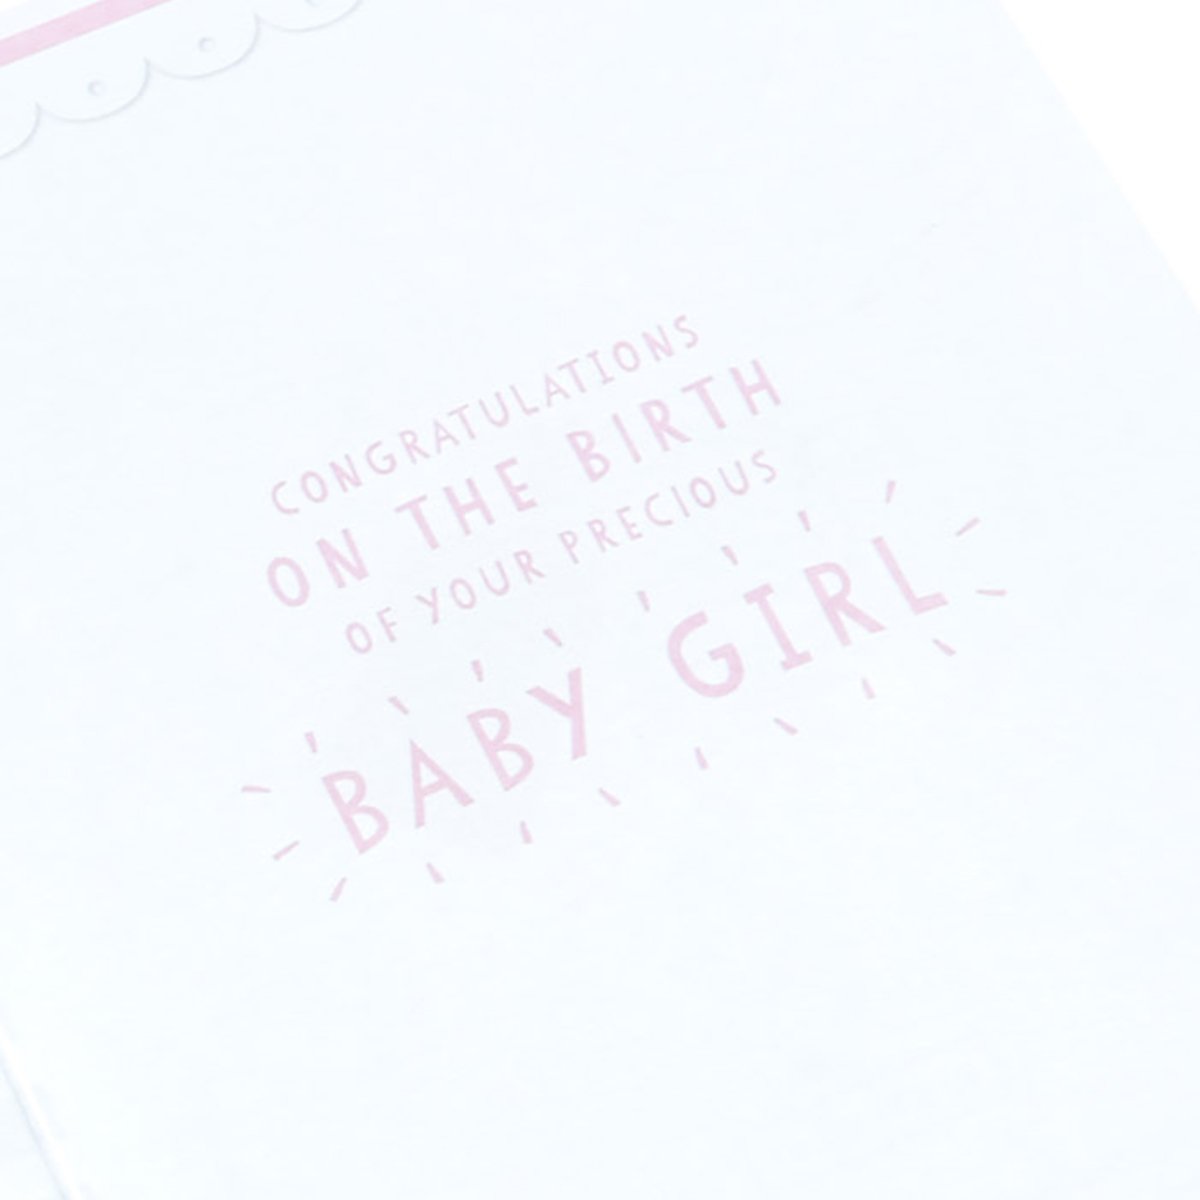 New Baby Card - Hello Baby Girl